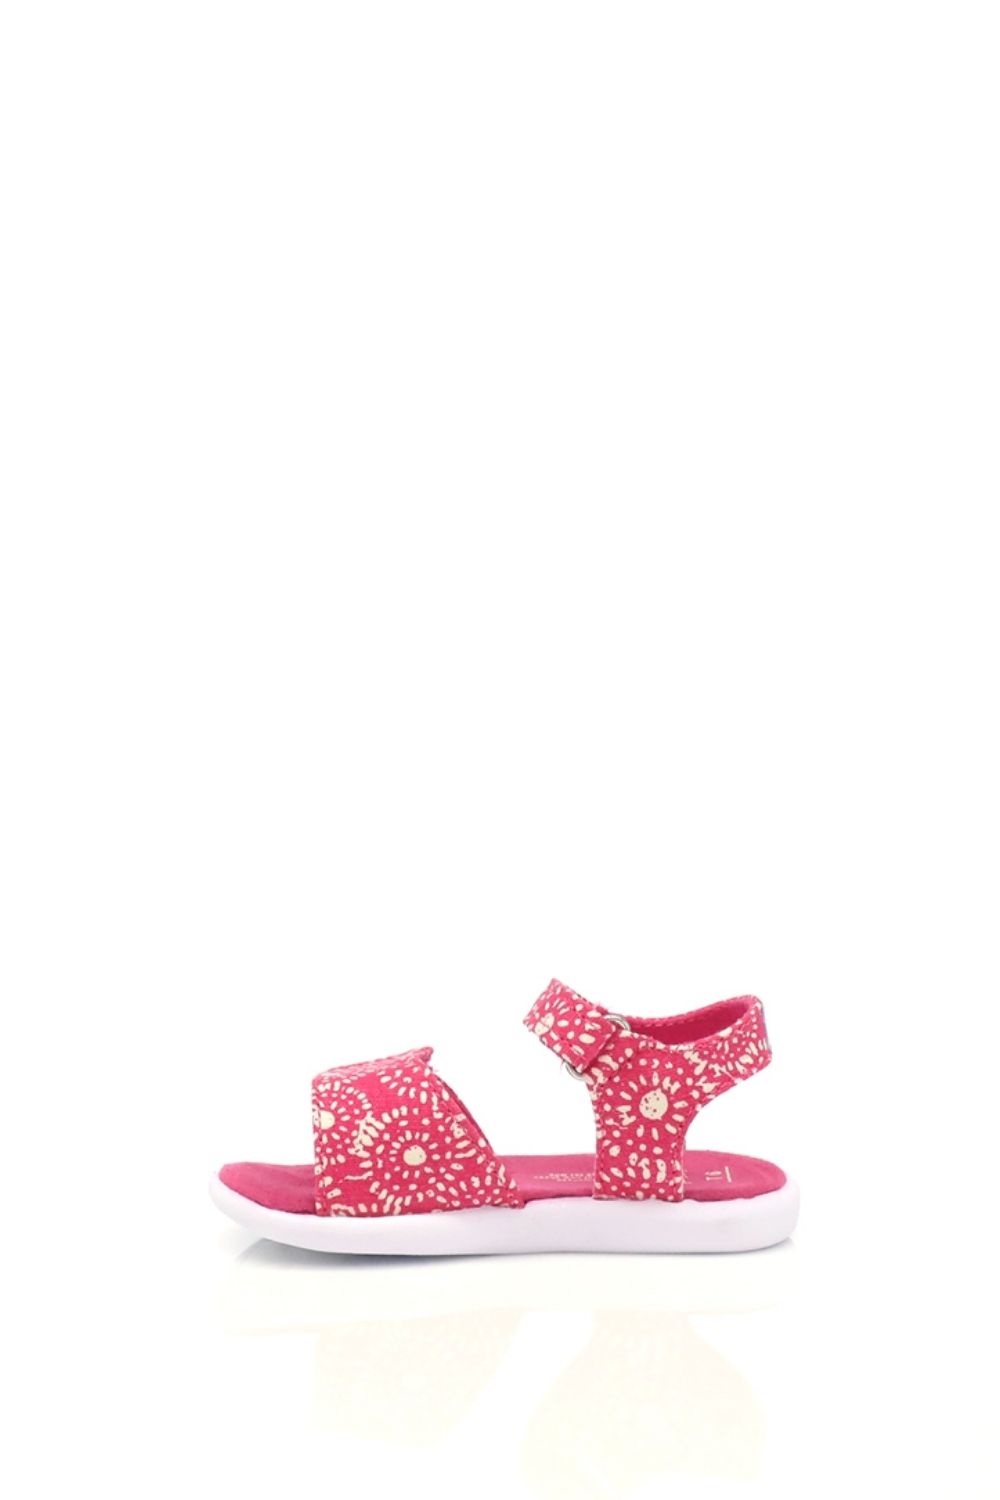 TOMS - Βρεφικά σανδάλια TOMS ροζ Παιδικά/Baby/Παπούτσια/Casual